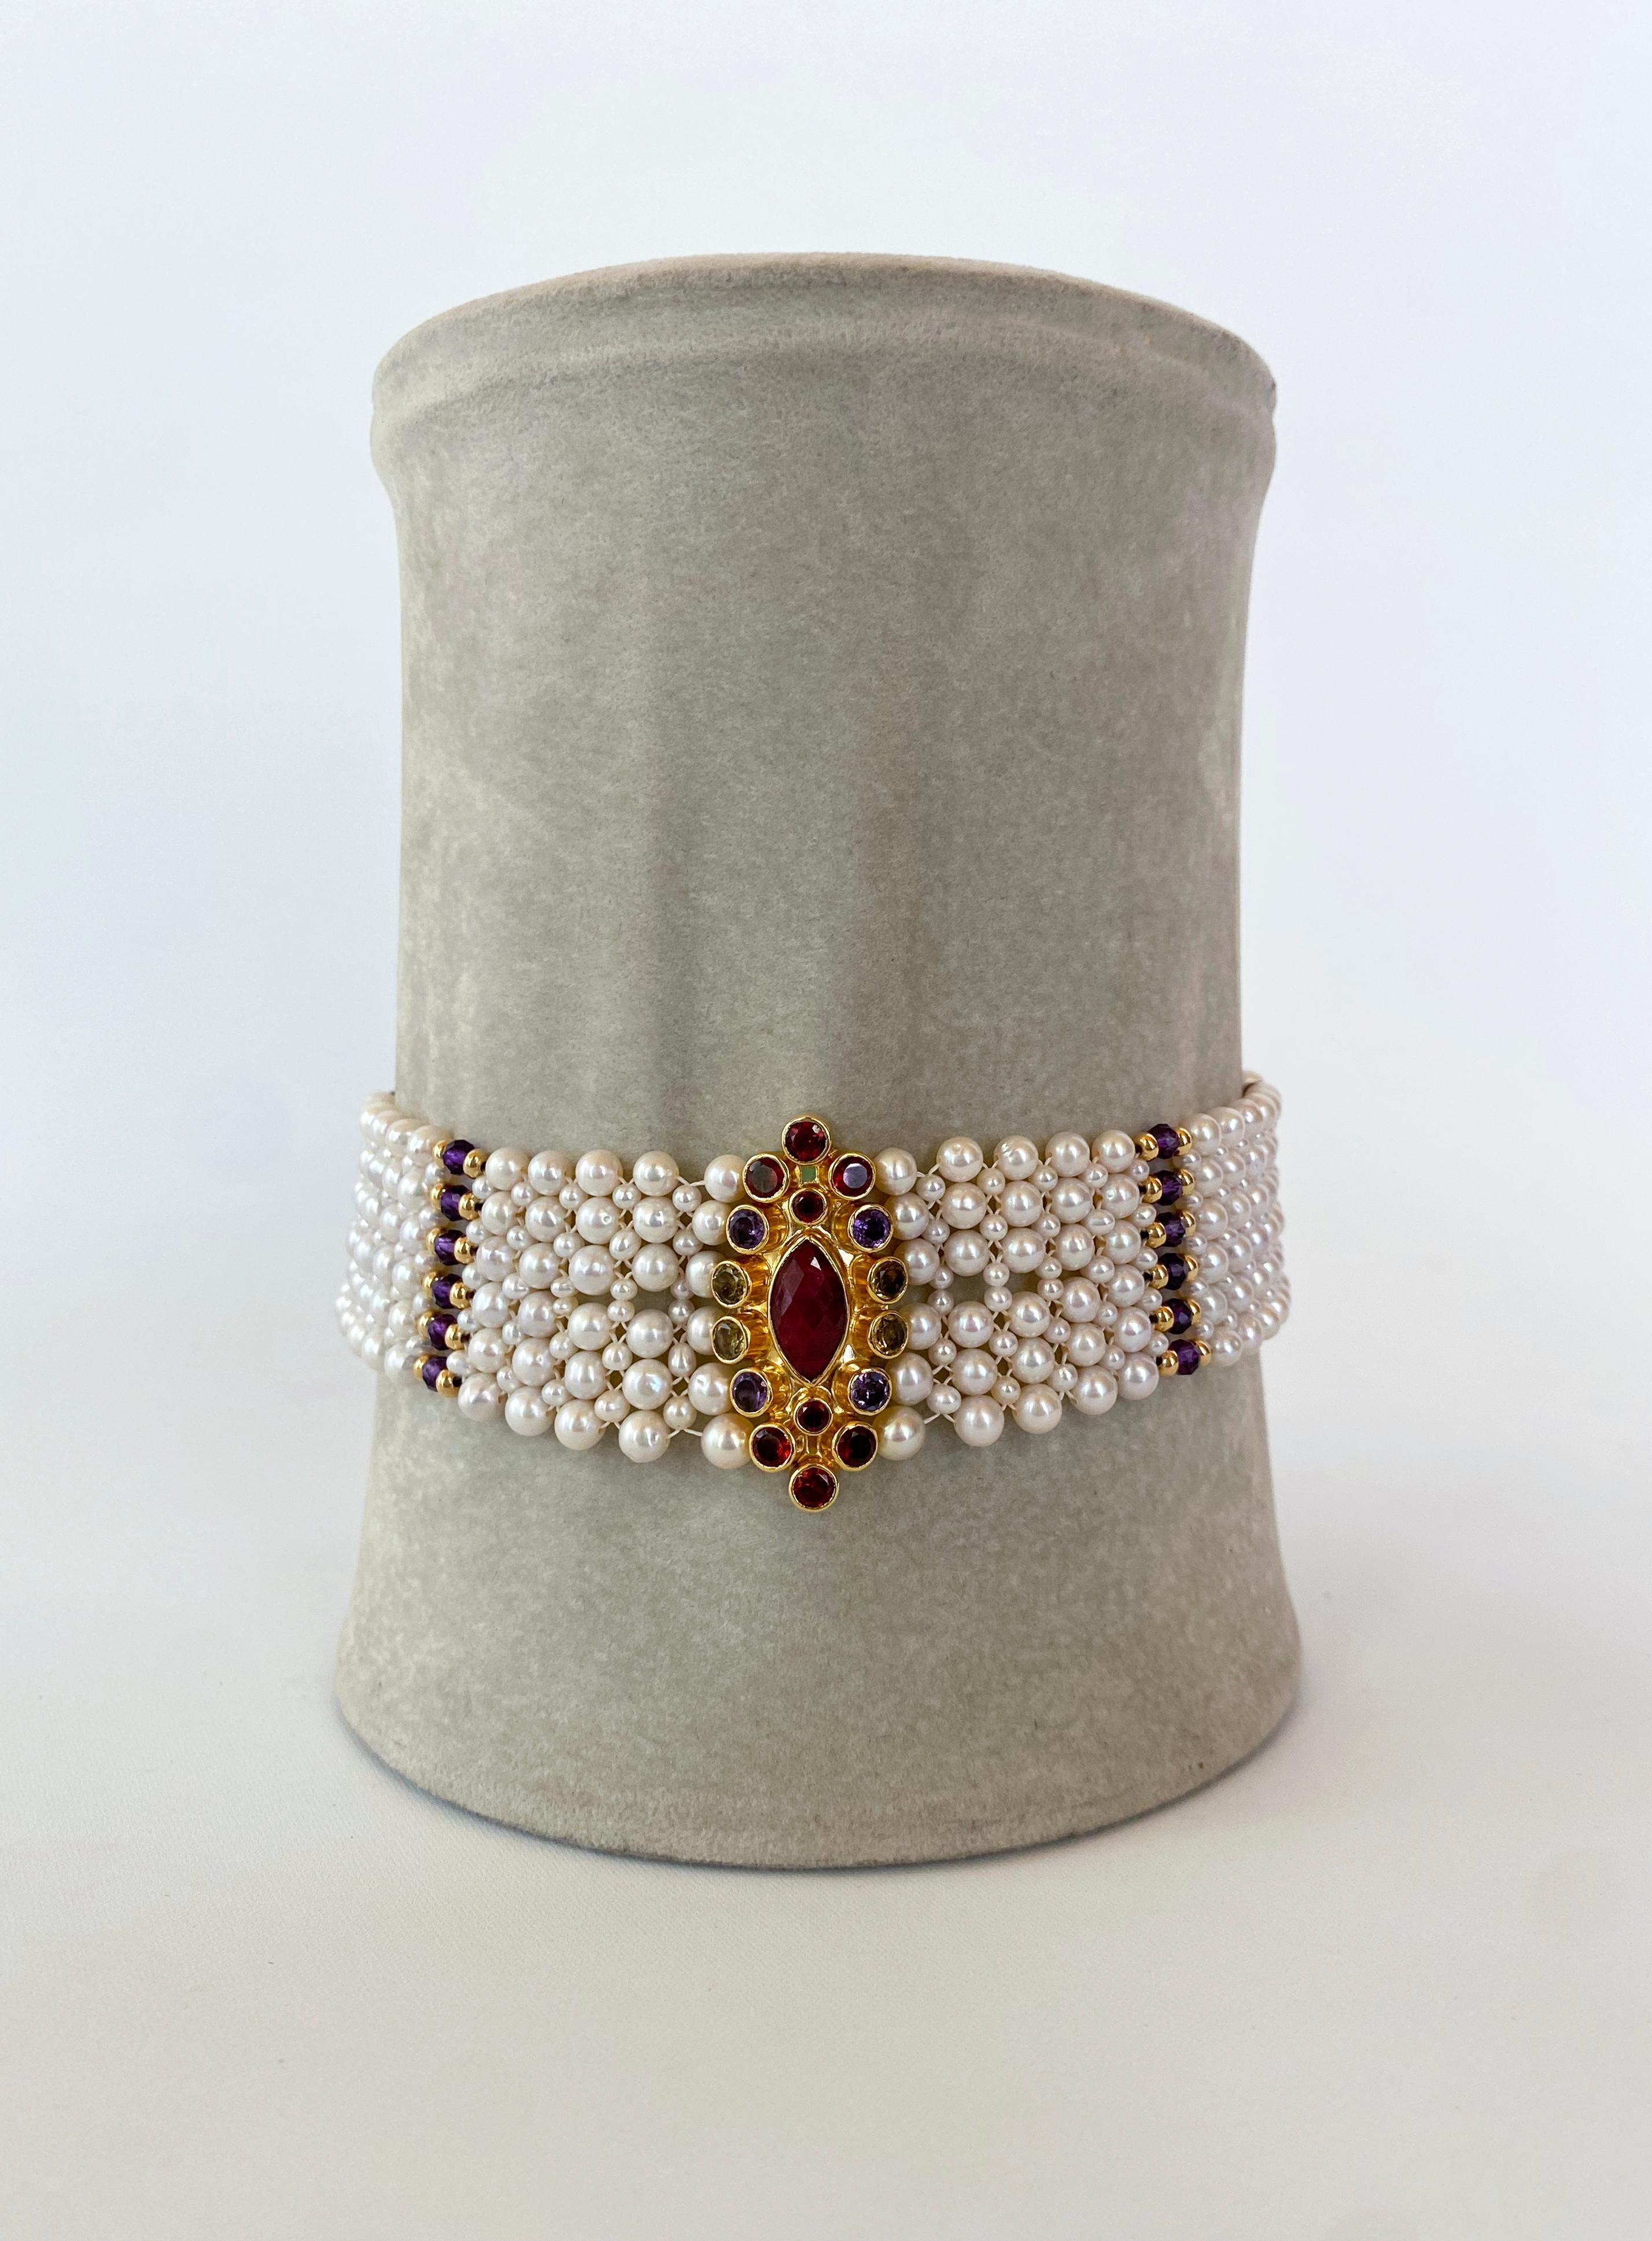 Marina J woven pearl choker with multi color semi precious beads   11